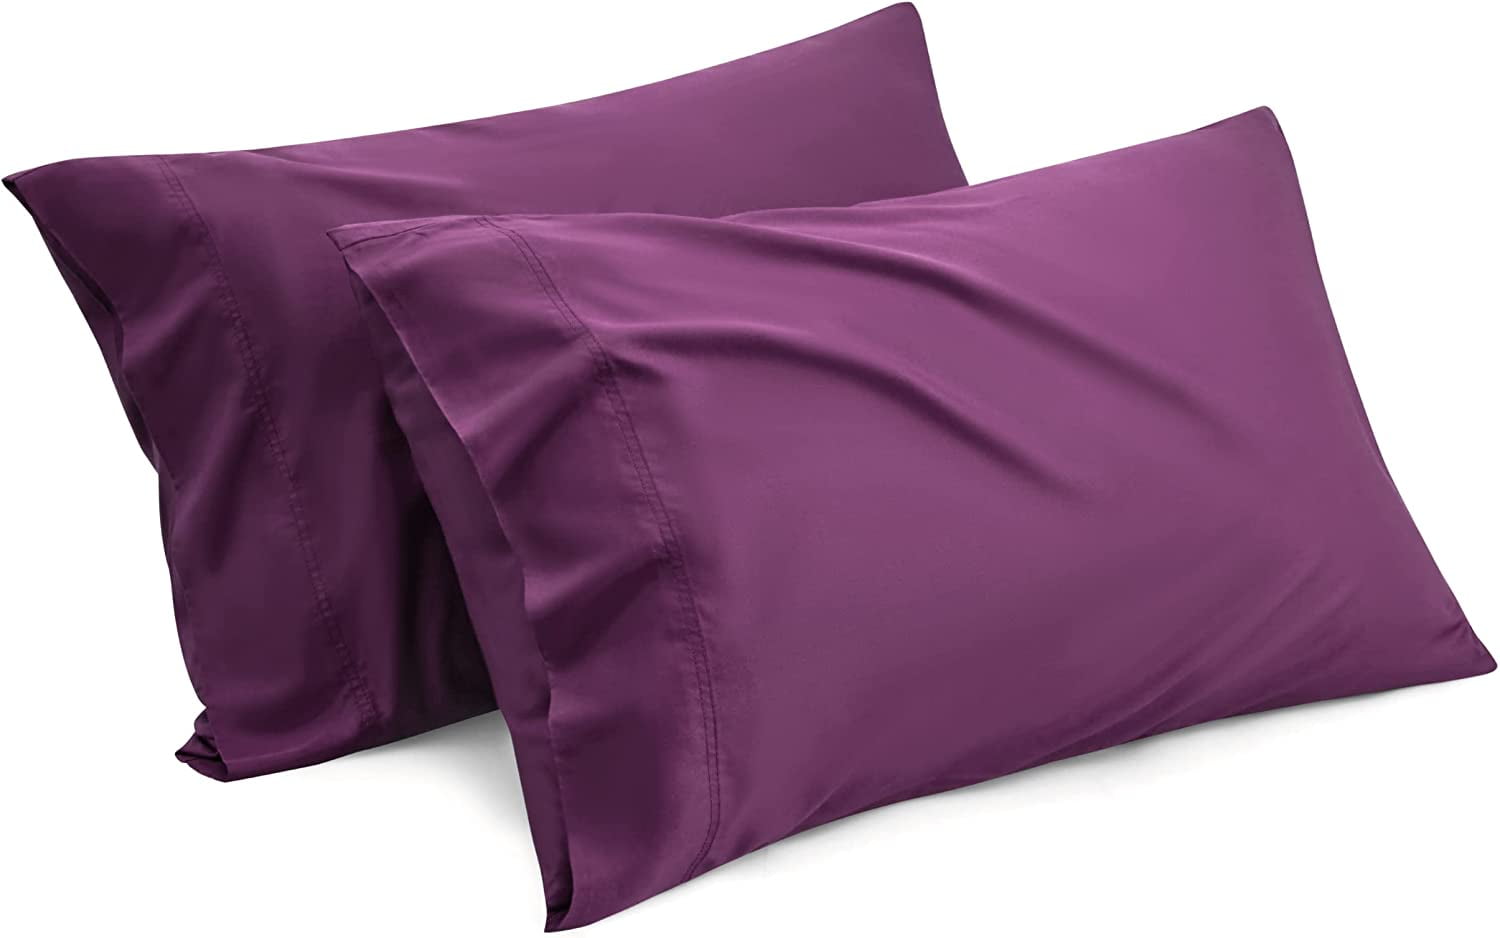 Outdoor Purple Cushion Cover Zip Closure. 